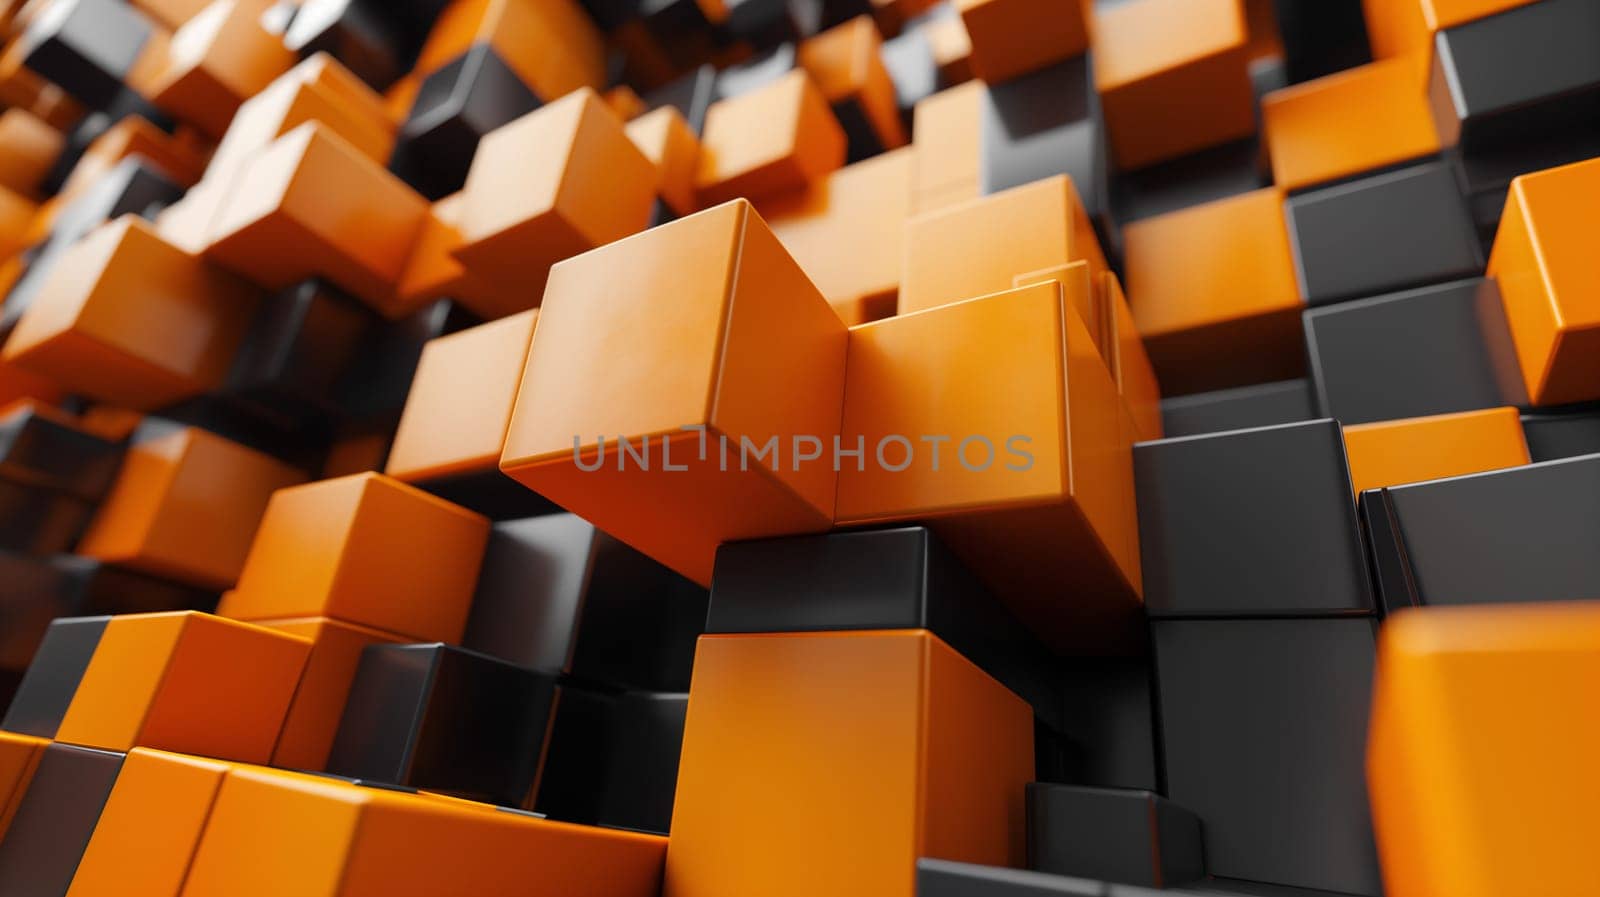 Abstract Array of Interlocking Orange Cubes by chrisroll